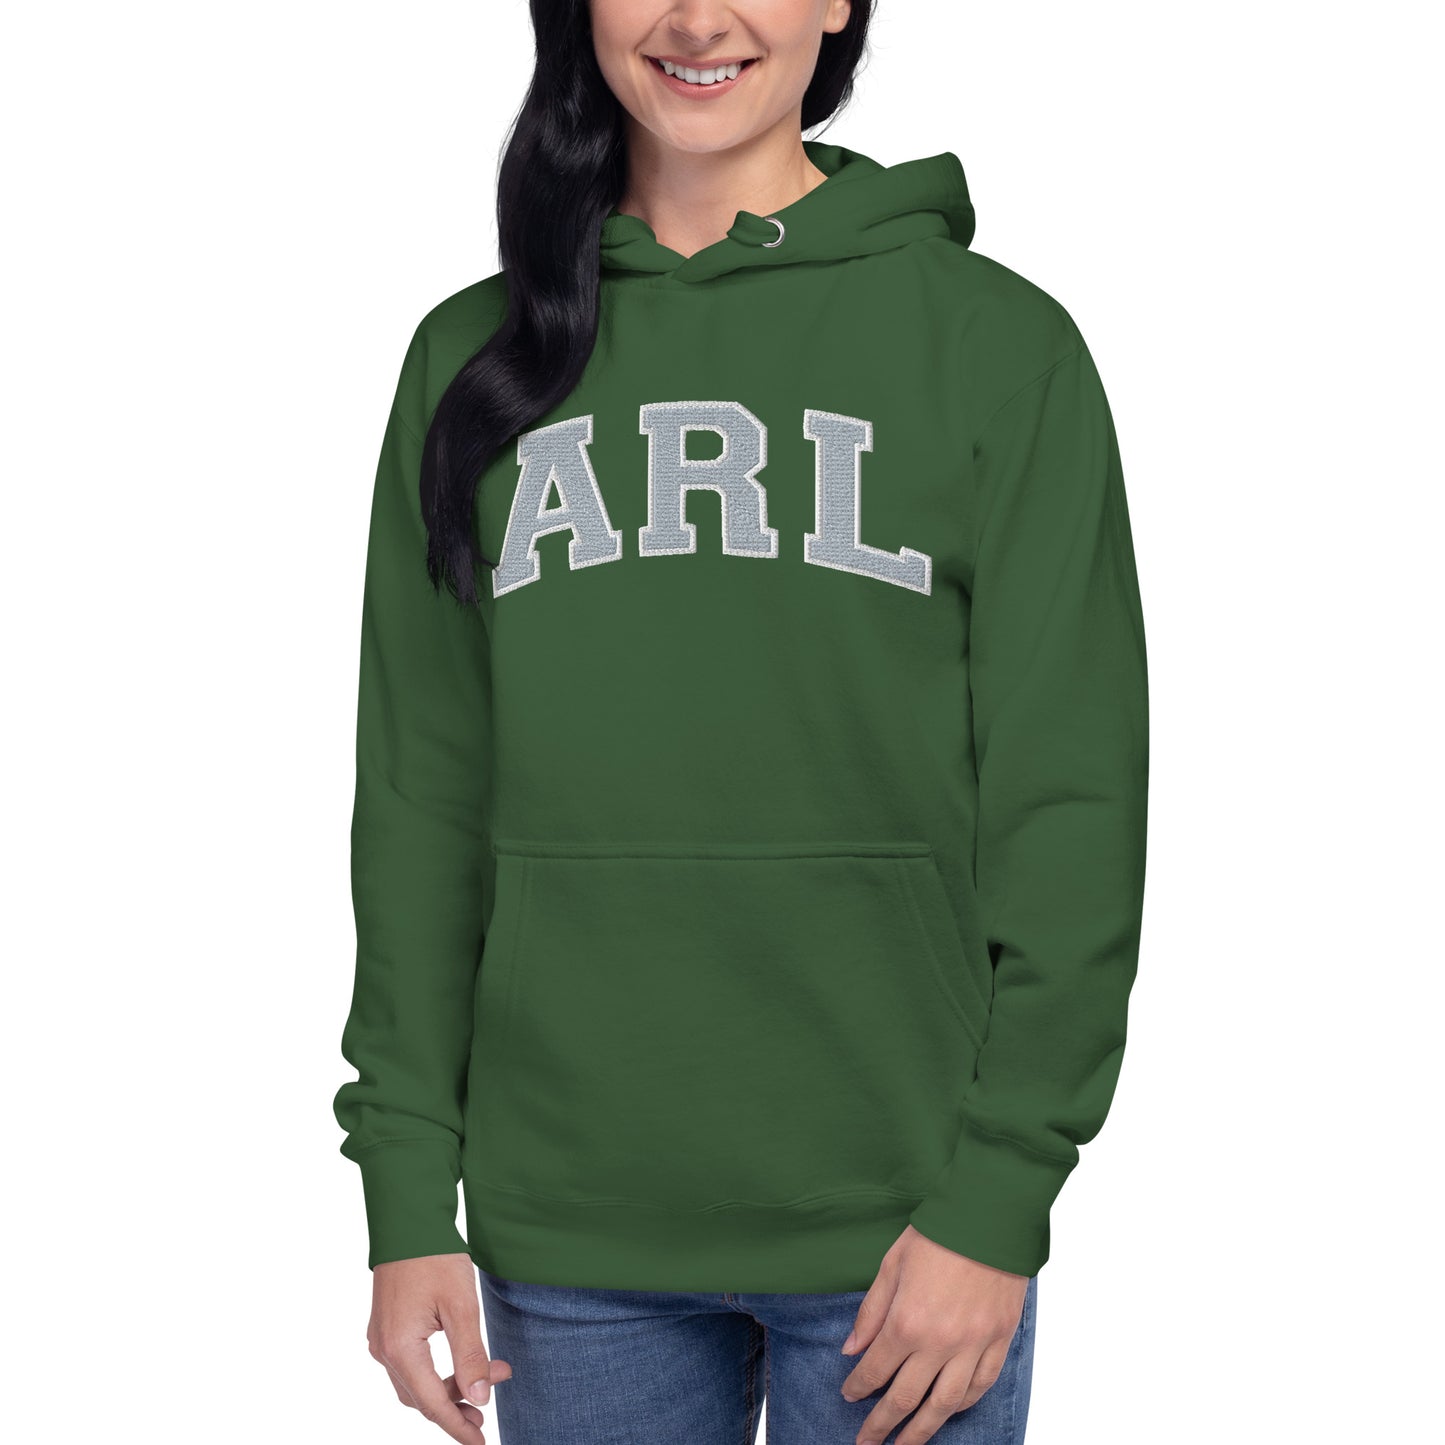 ARL hoodie (embroidered)